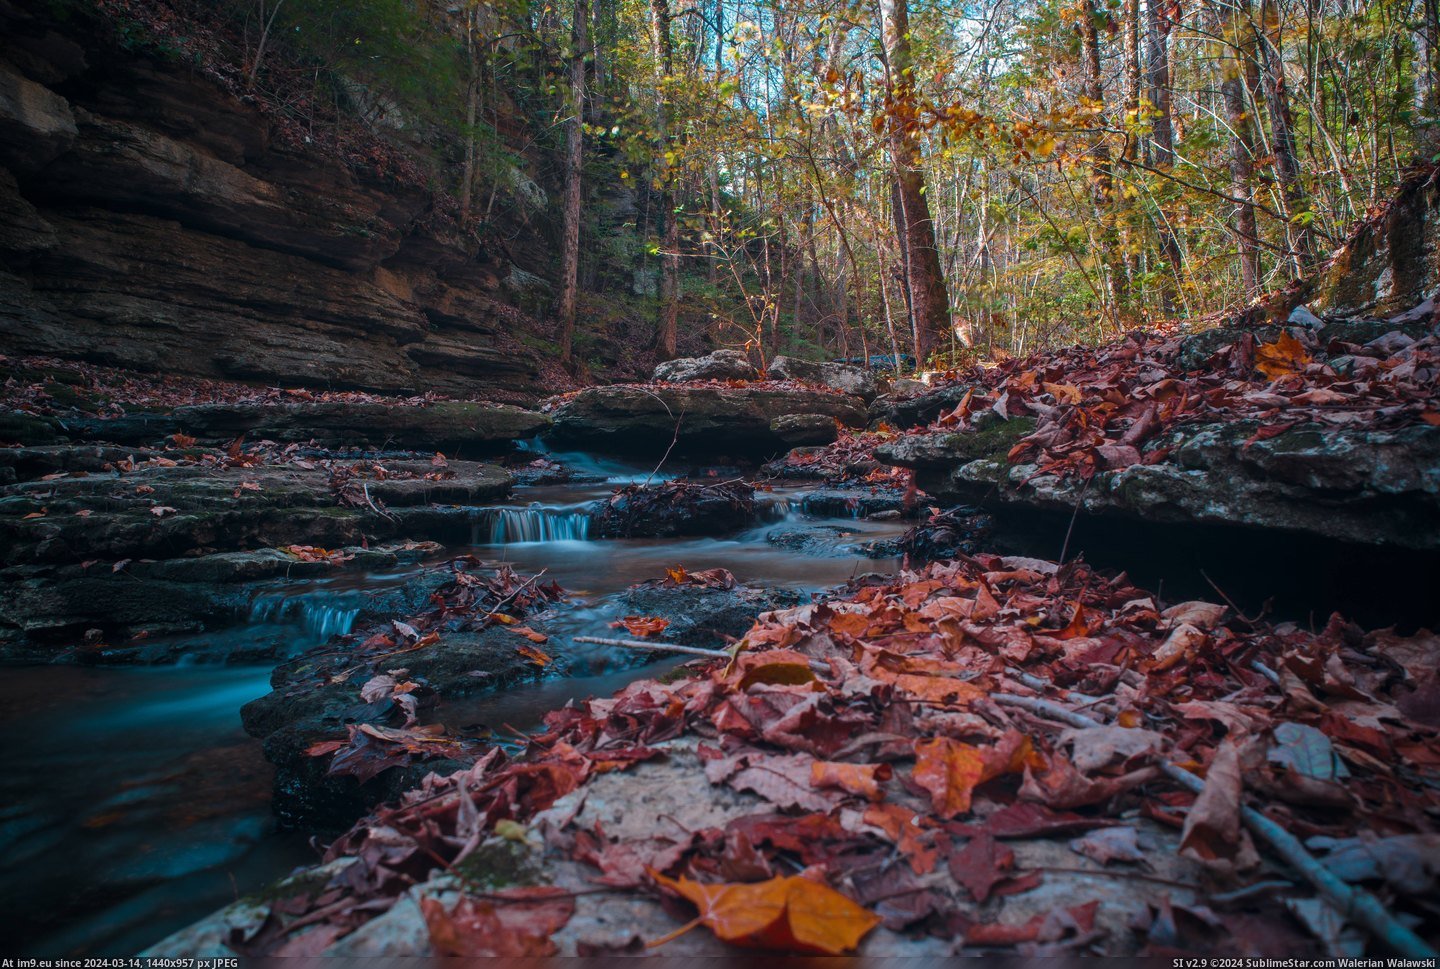 #Secret #Creek #Kentucky #6000x4000 #Location [Earthporn] Creek at a secret location in Kentucky,  [6000x4000] Pic. (Bild von album My r/EARTHPORN favs))